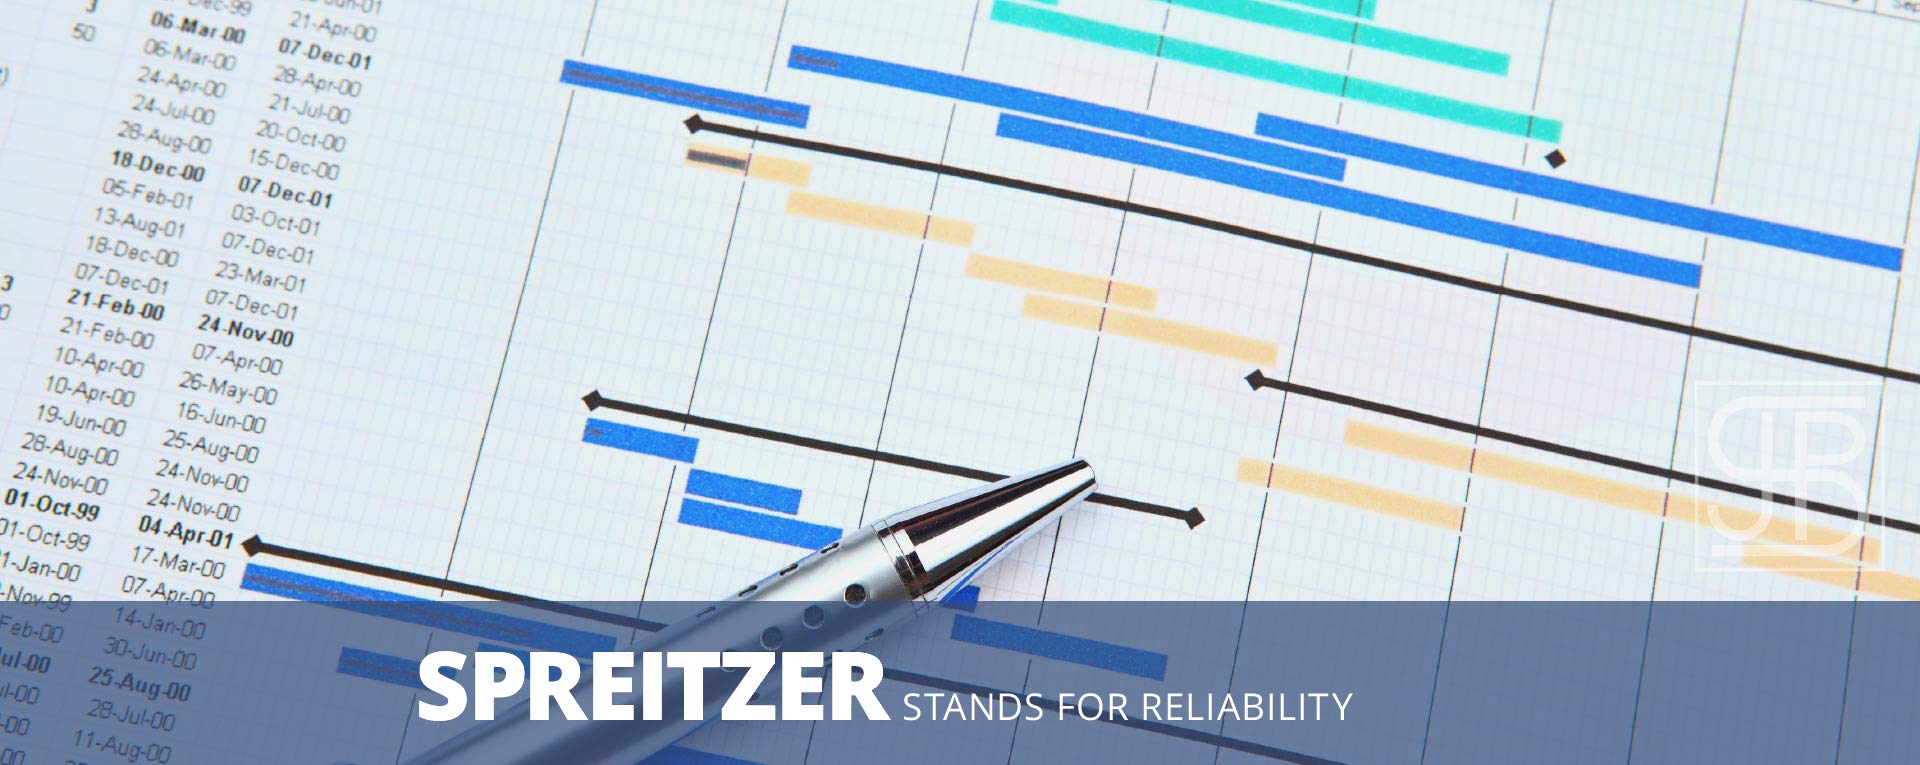 Spreitzer stands for reliability